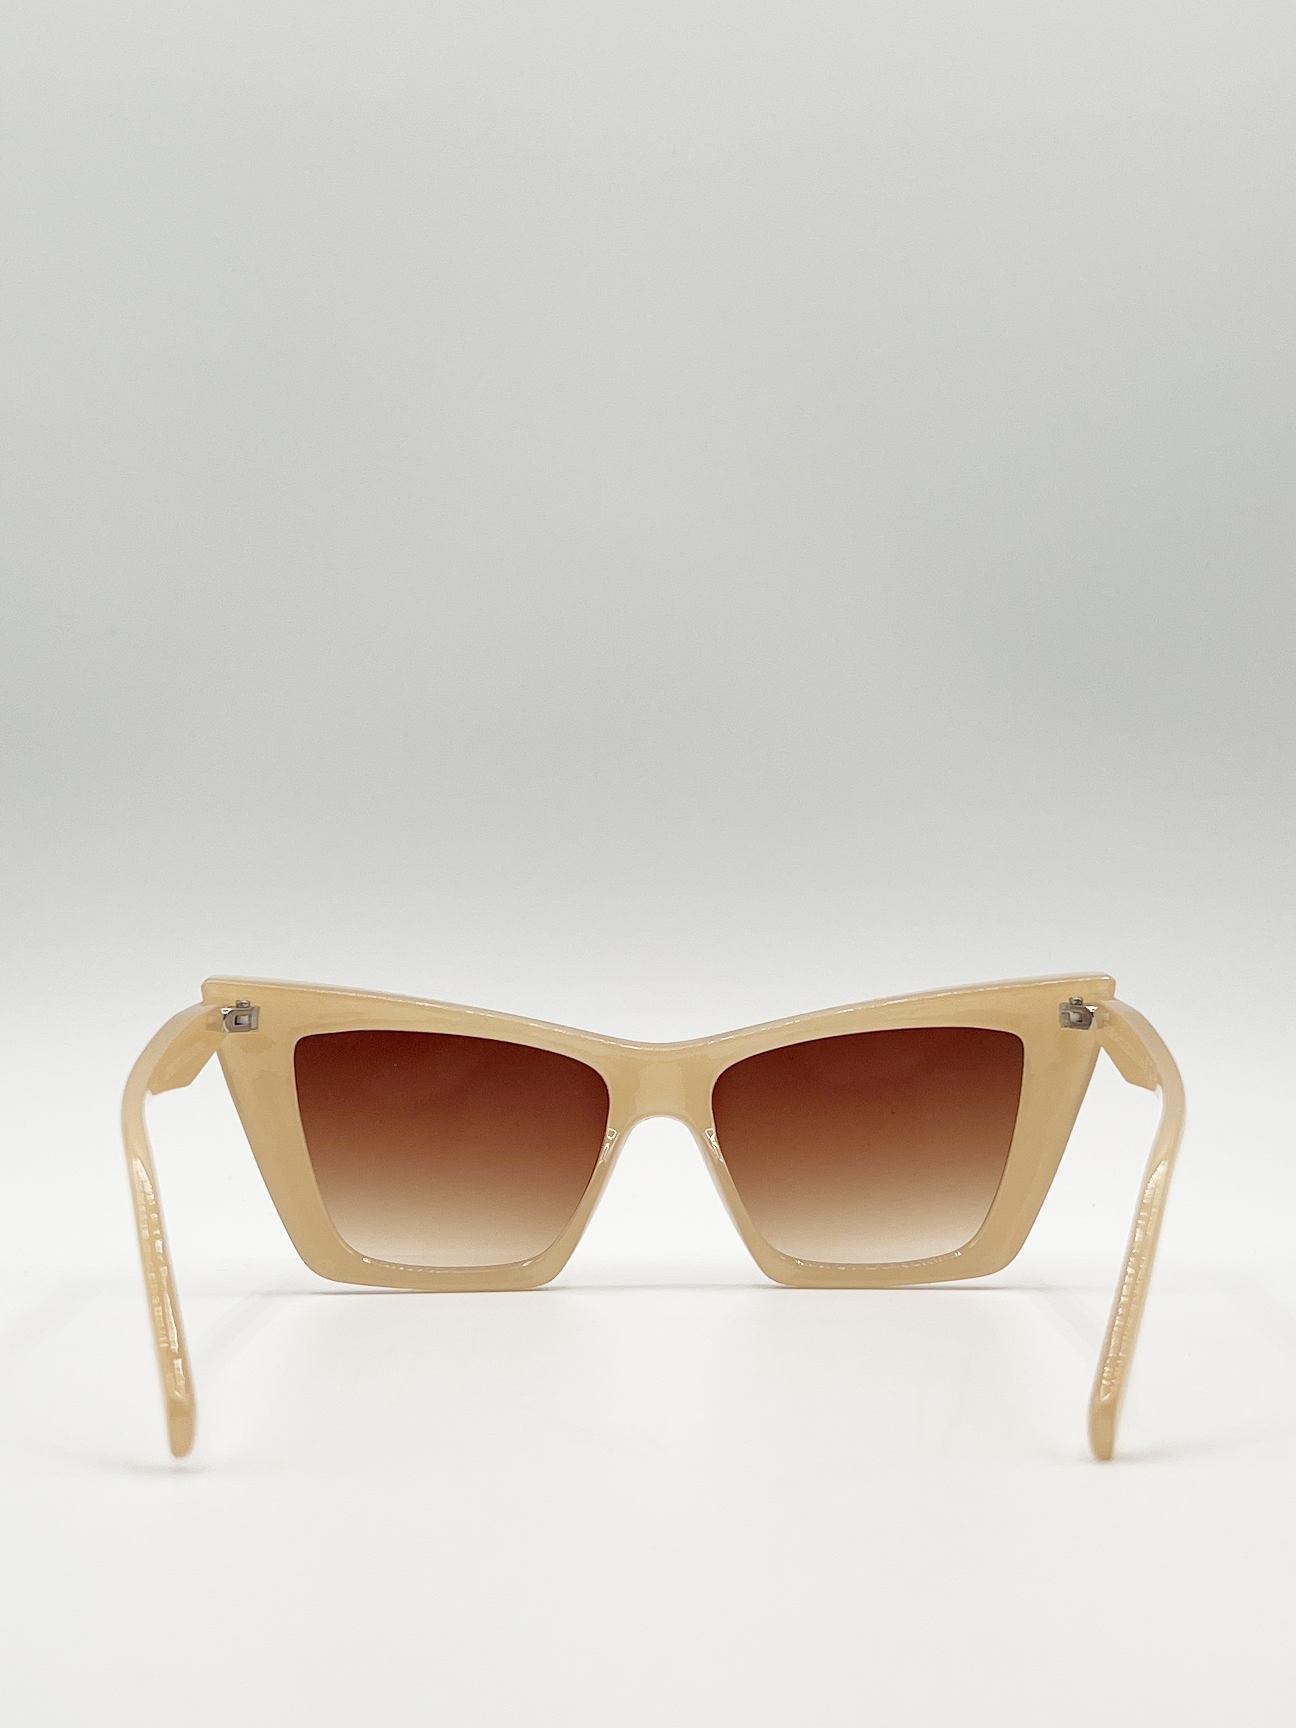 Oversized angular cateye sunglasses in Mocha